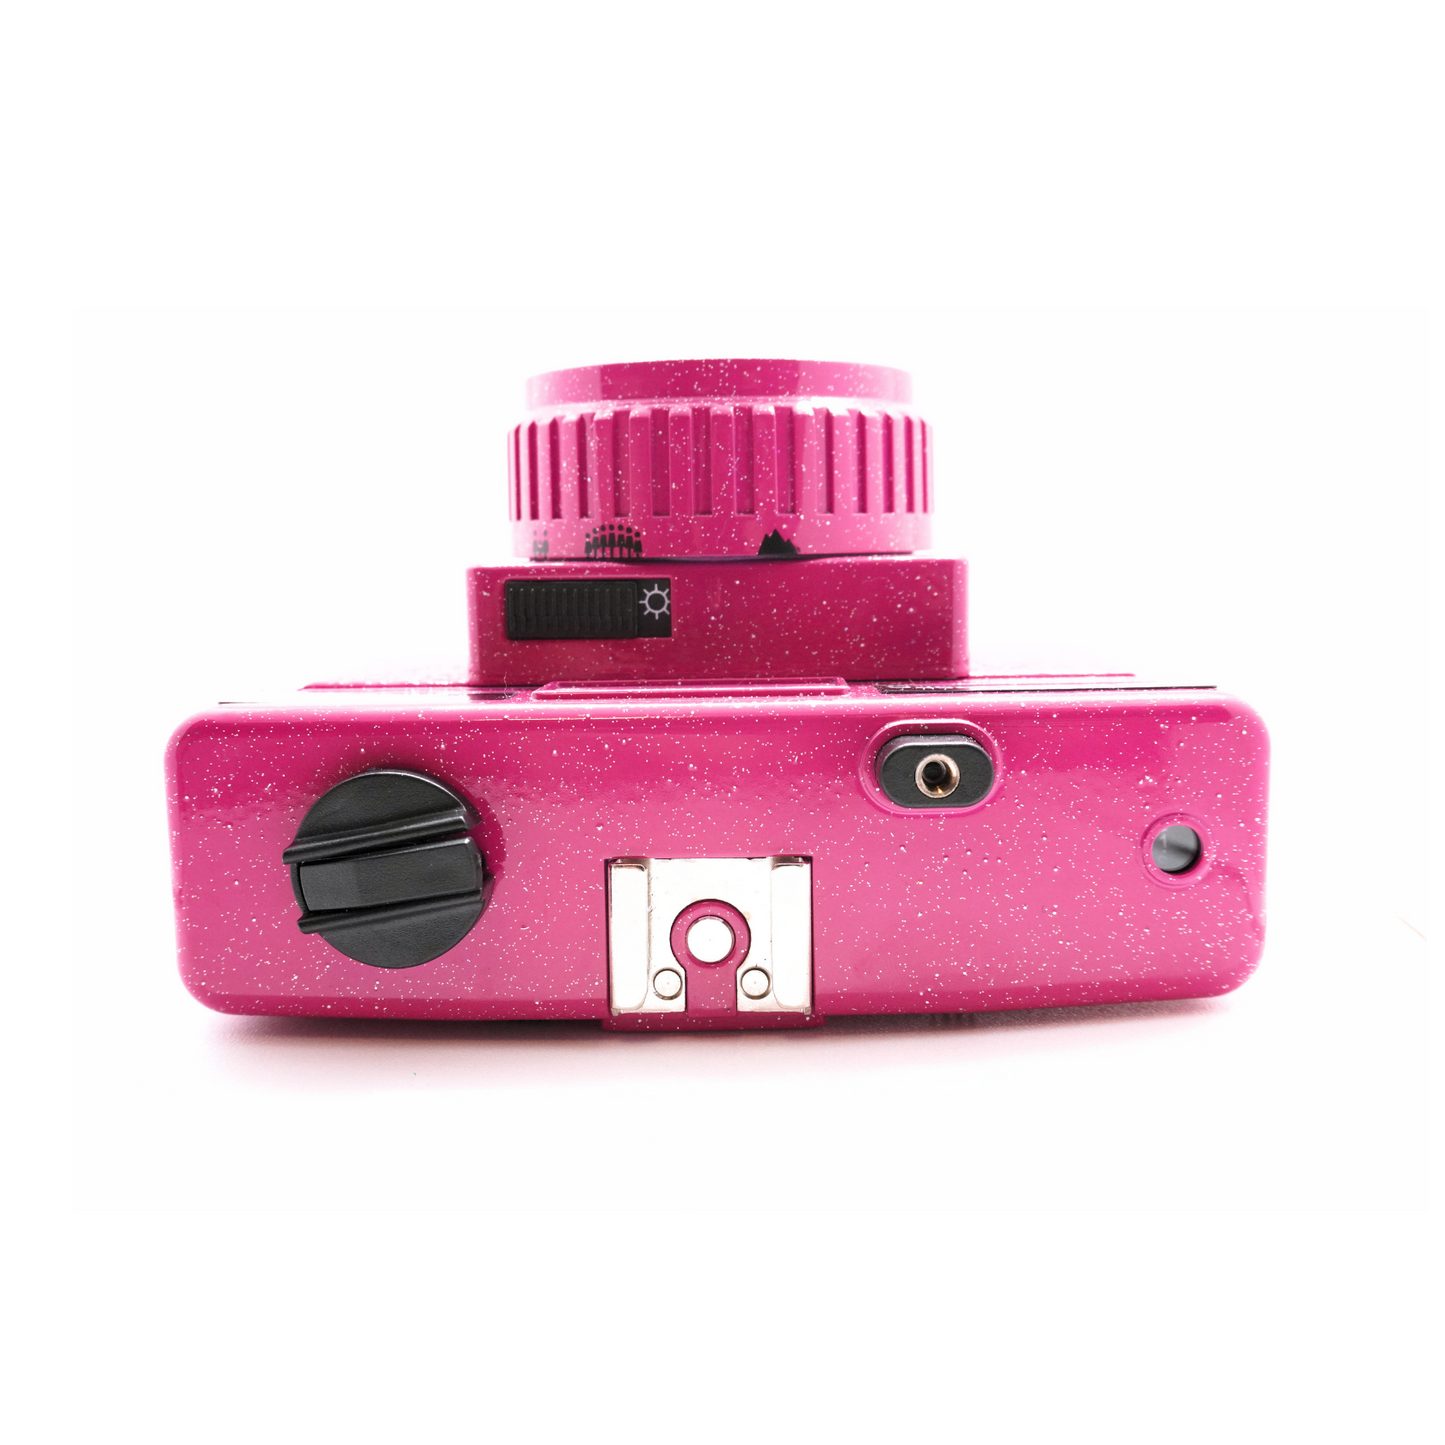 Holga 135FC Film Camera (Pink Sparkle)